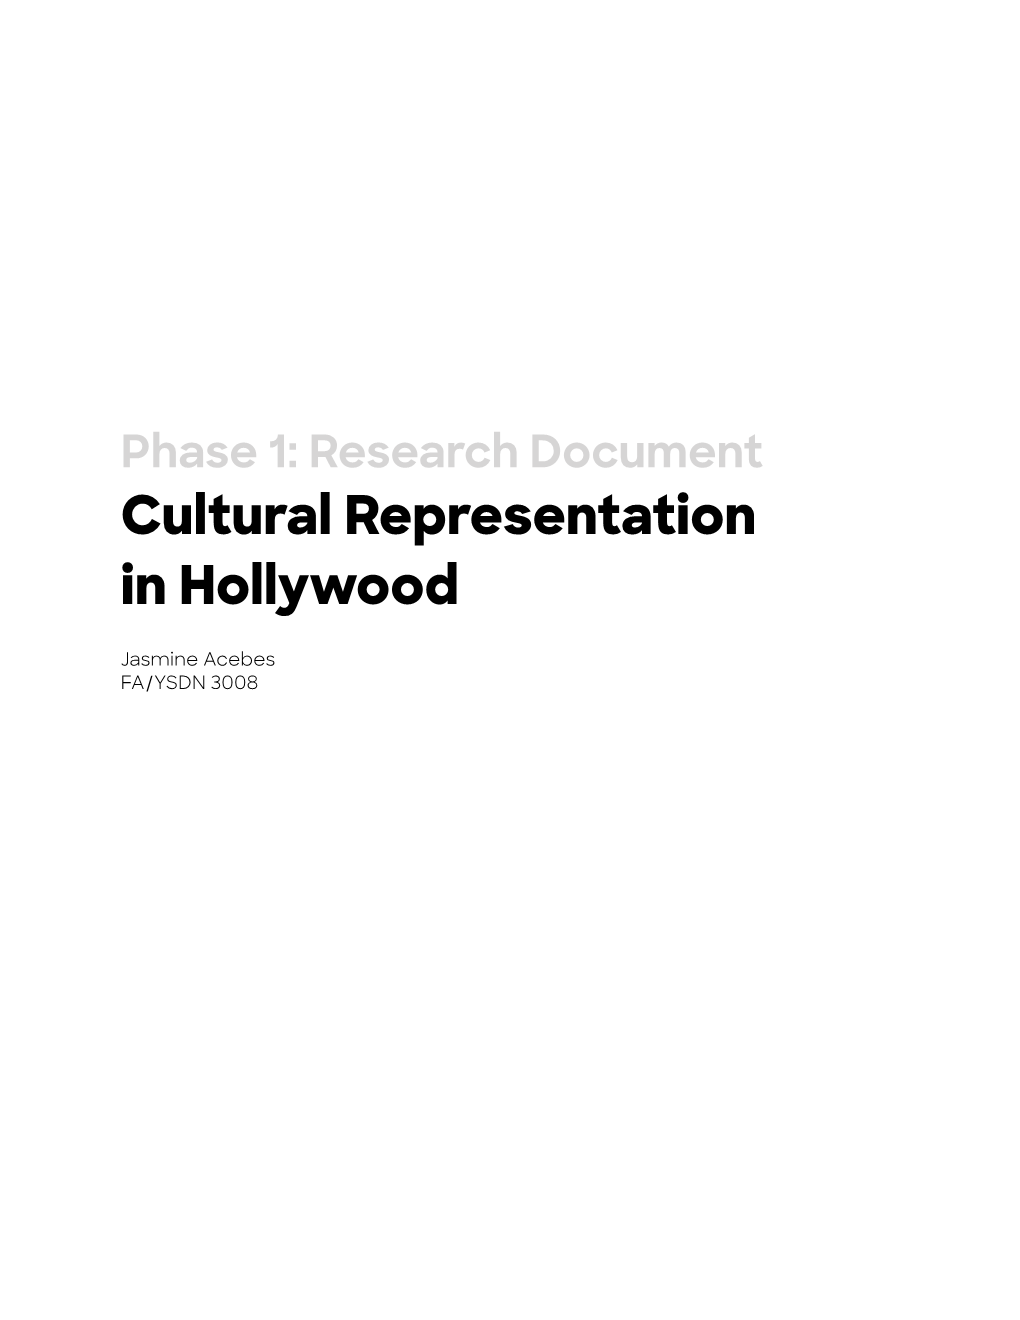 Cultural Representation in Hollywood